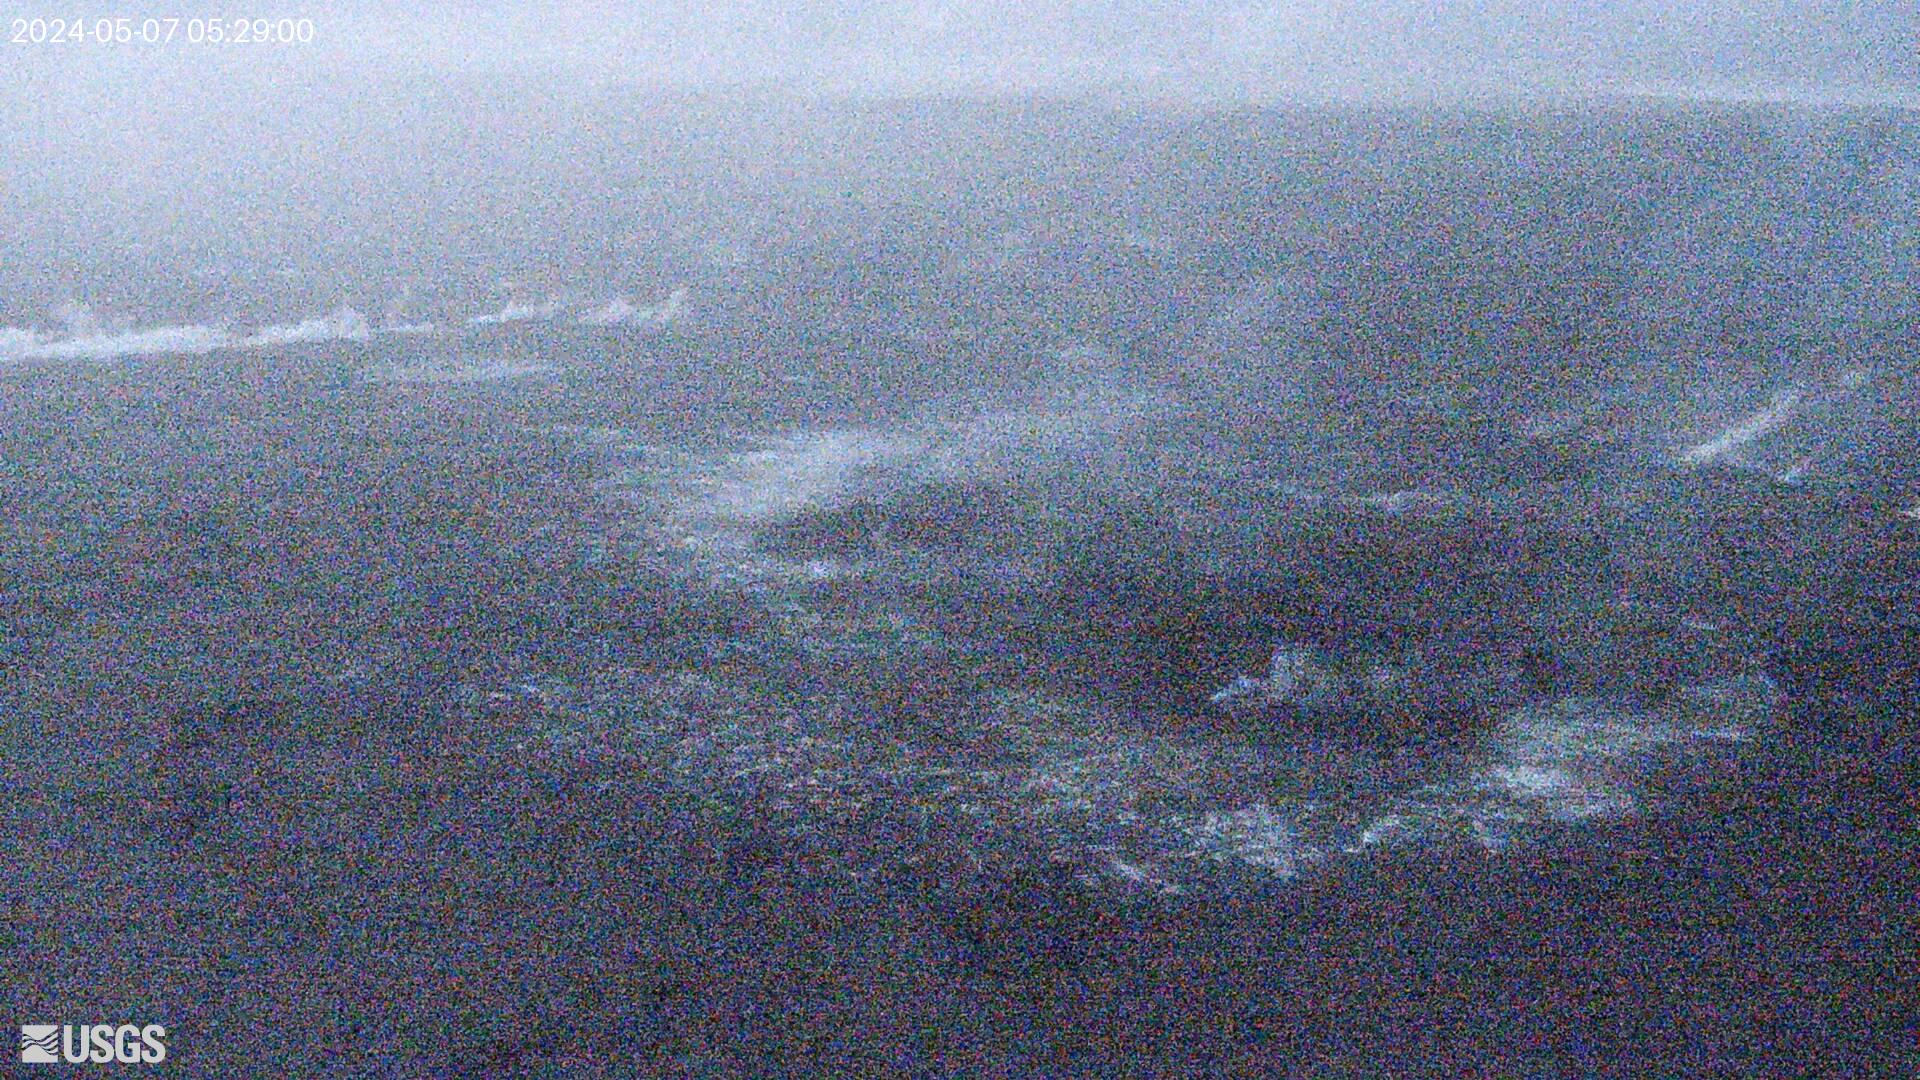 West vent in Halemaʻumaʻu and lava lake - [V1cam] preview image